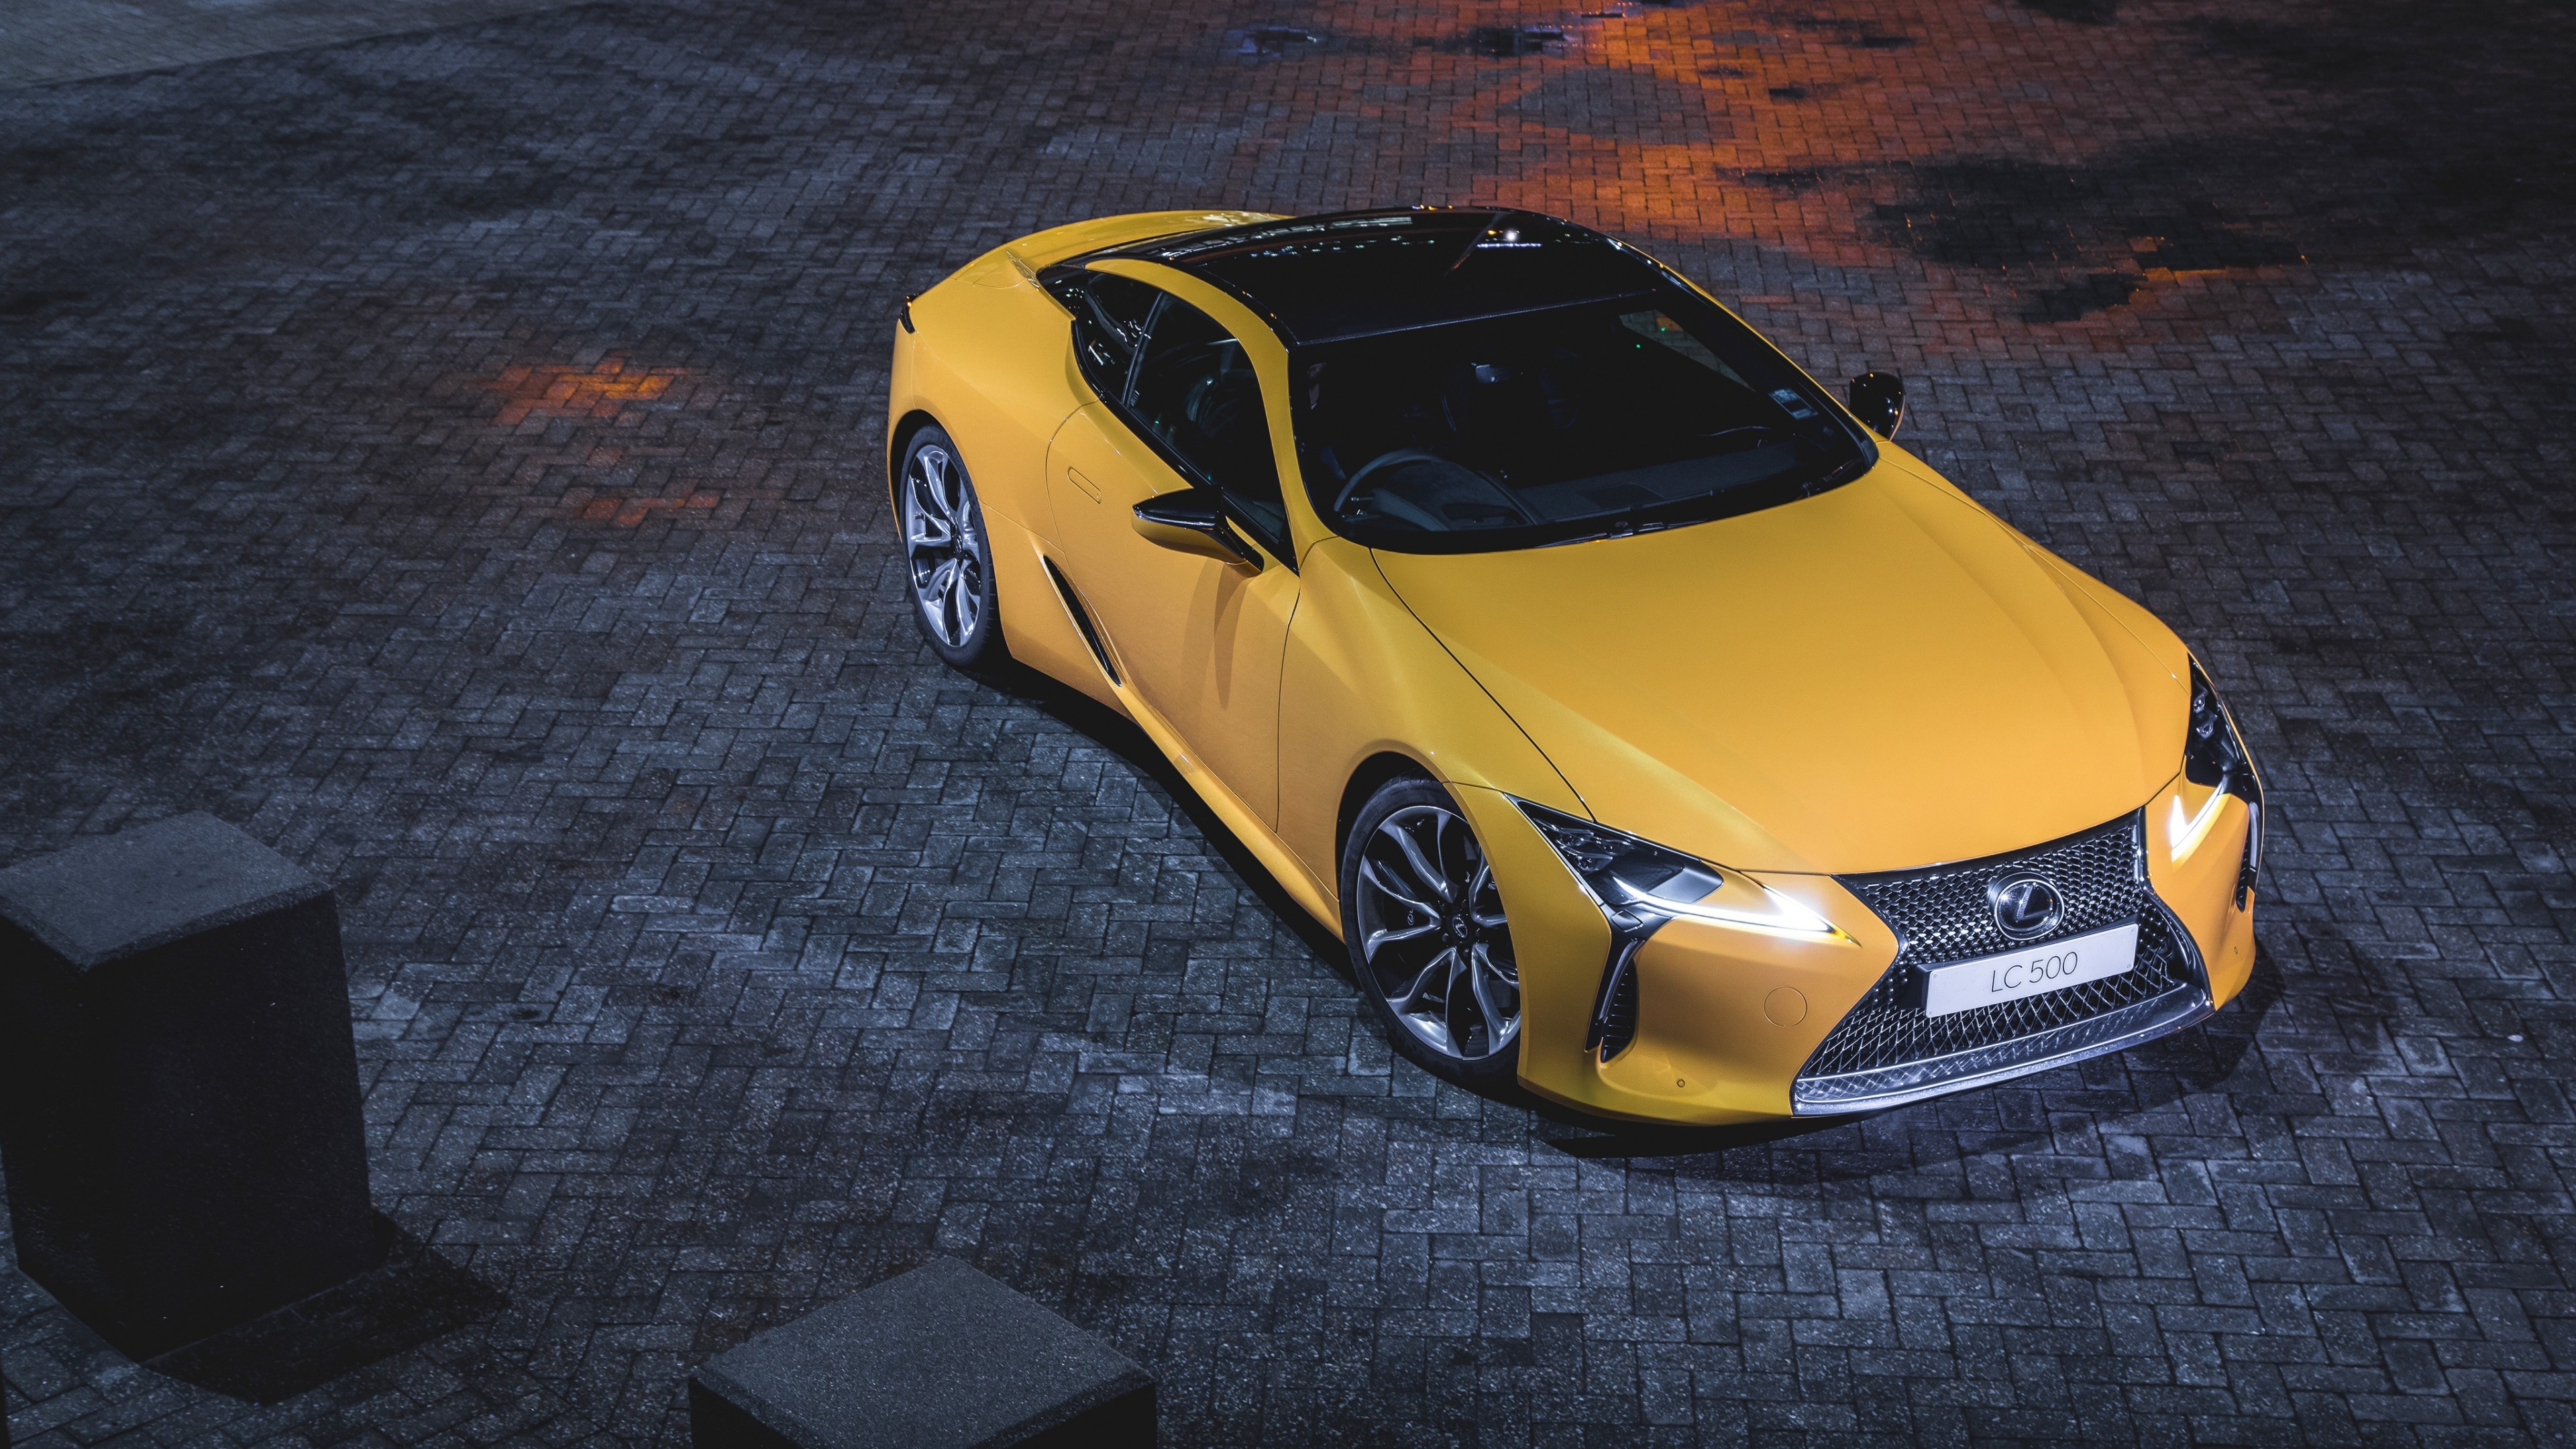 Lexus LC, 2018 sports car, Yellow beauty, Japanese engineering marvel, 3840x2160 4K Desktop